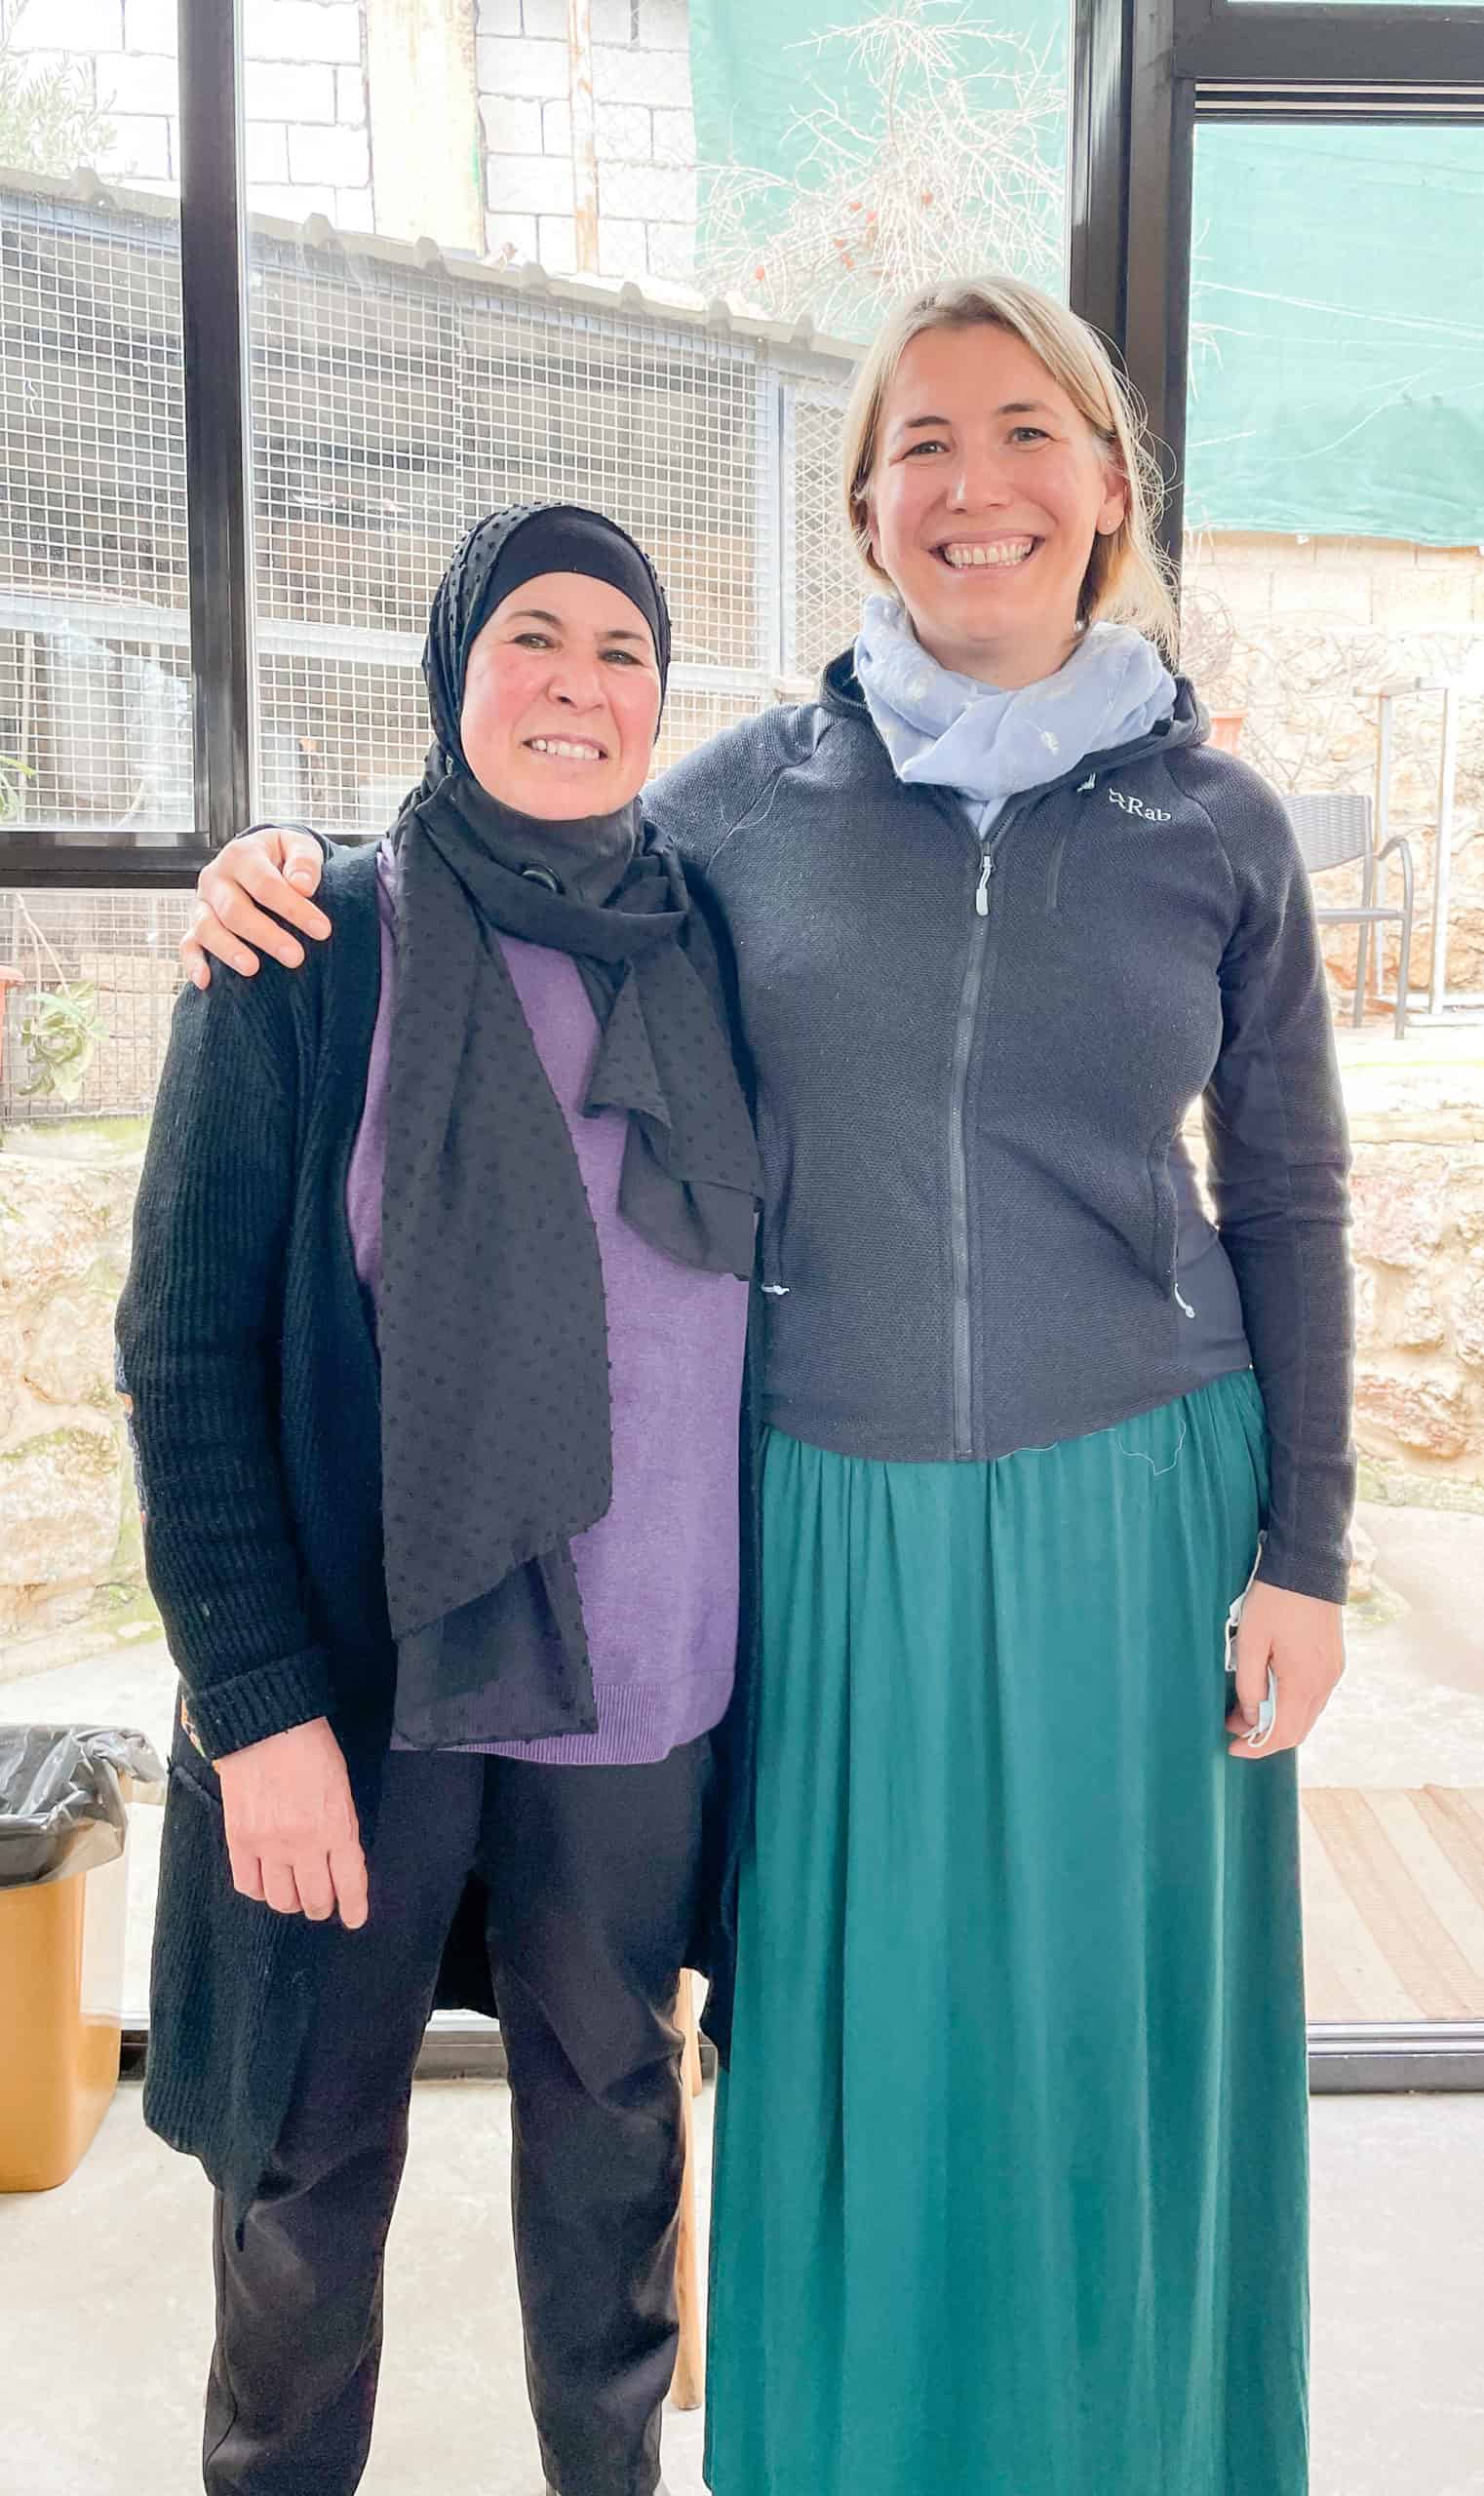 Jordan - meeting women in cooperatives